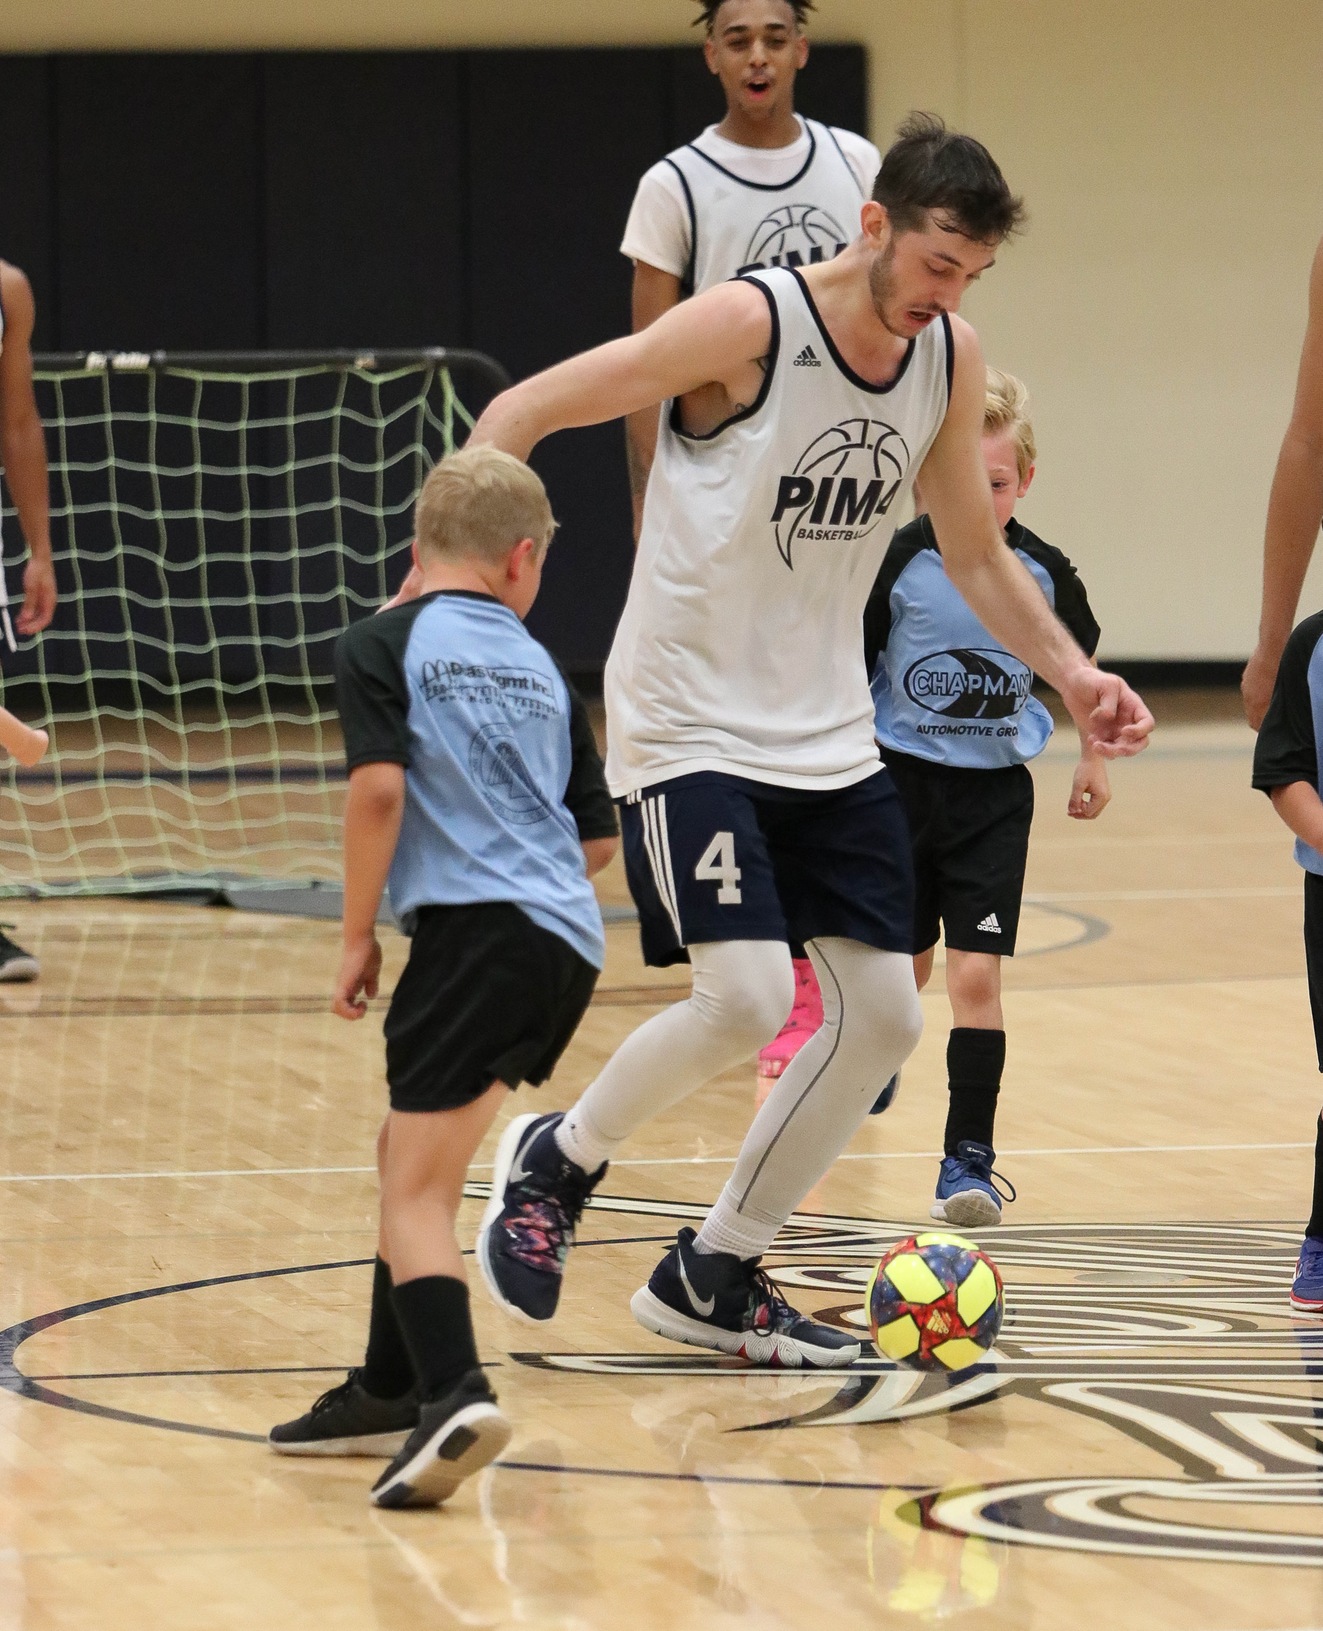 Men's Basketball plays min-soccer with Little Leaguers